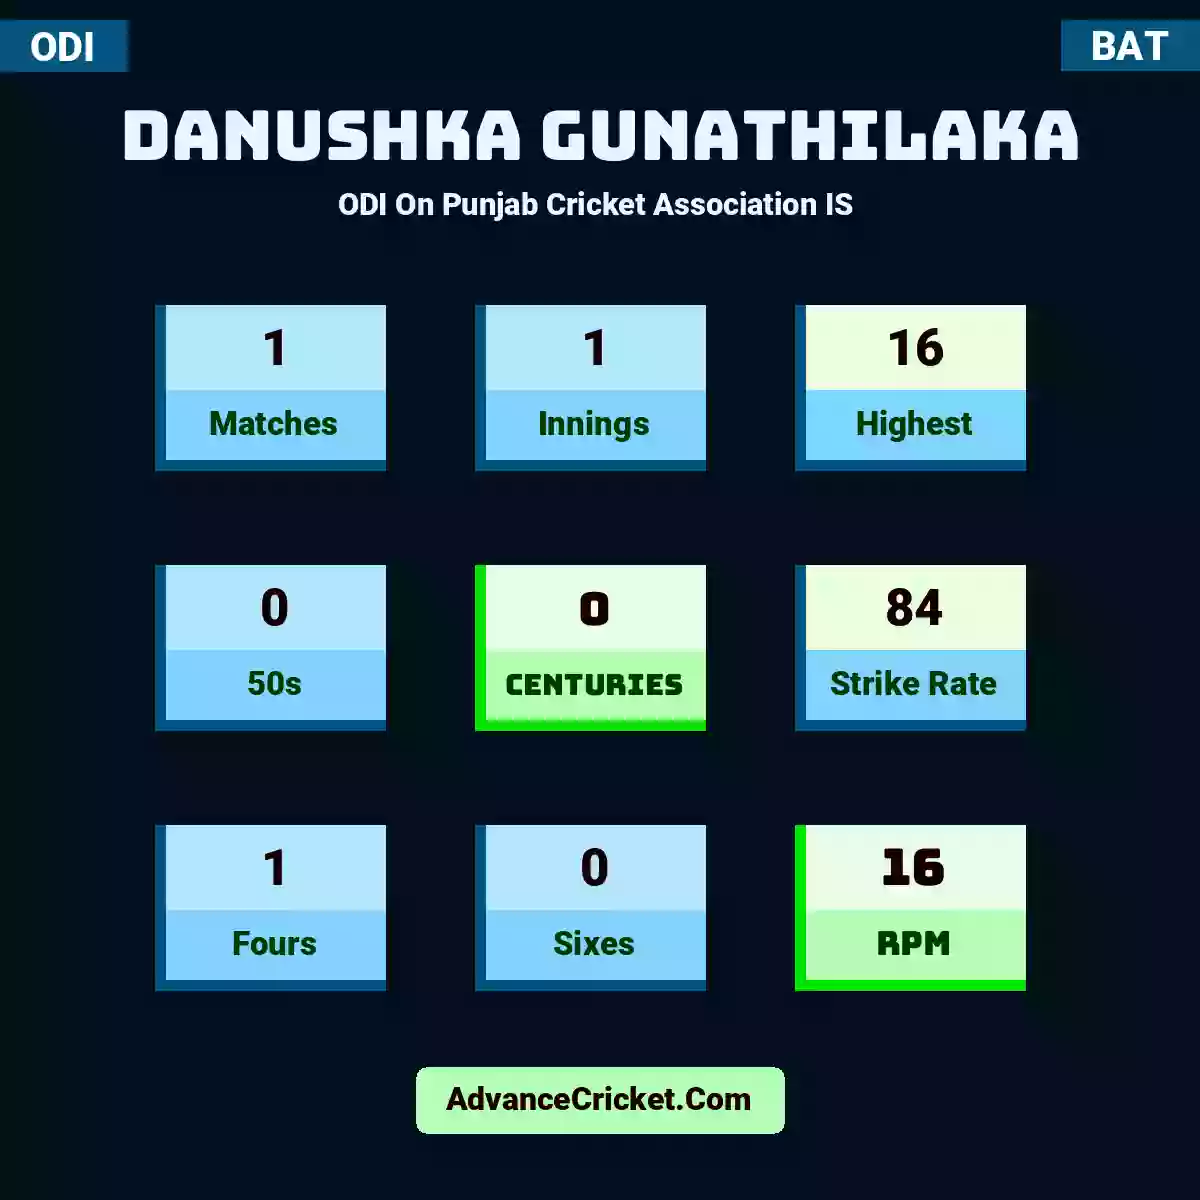 Danushka Gunathilaka ODI  On Punjab Cricket Association IS , Danushka Gunathilaka played 1 matches, scored 16 runs as highest, 0 half-centuries, and 0 centuries, with a strike rate of 84. D.Gunathilaka hit 1 fours and 0 sixes, with an RPM of 16.